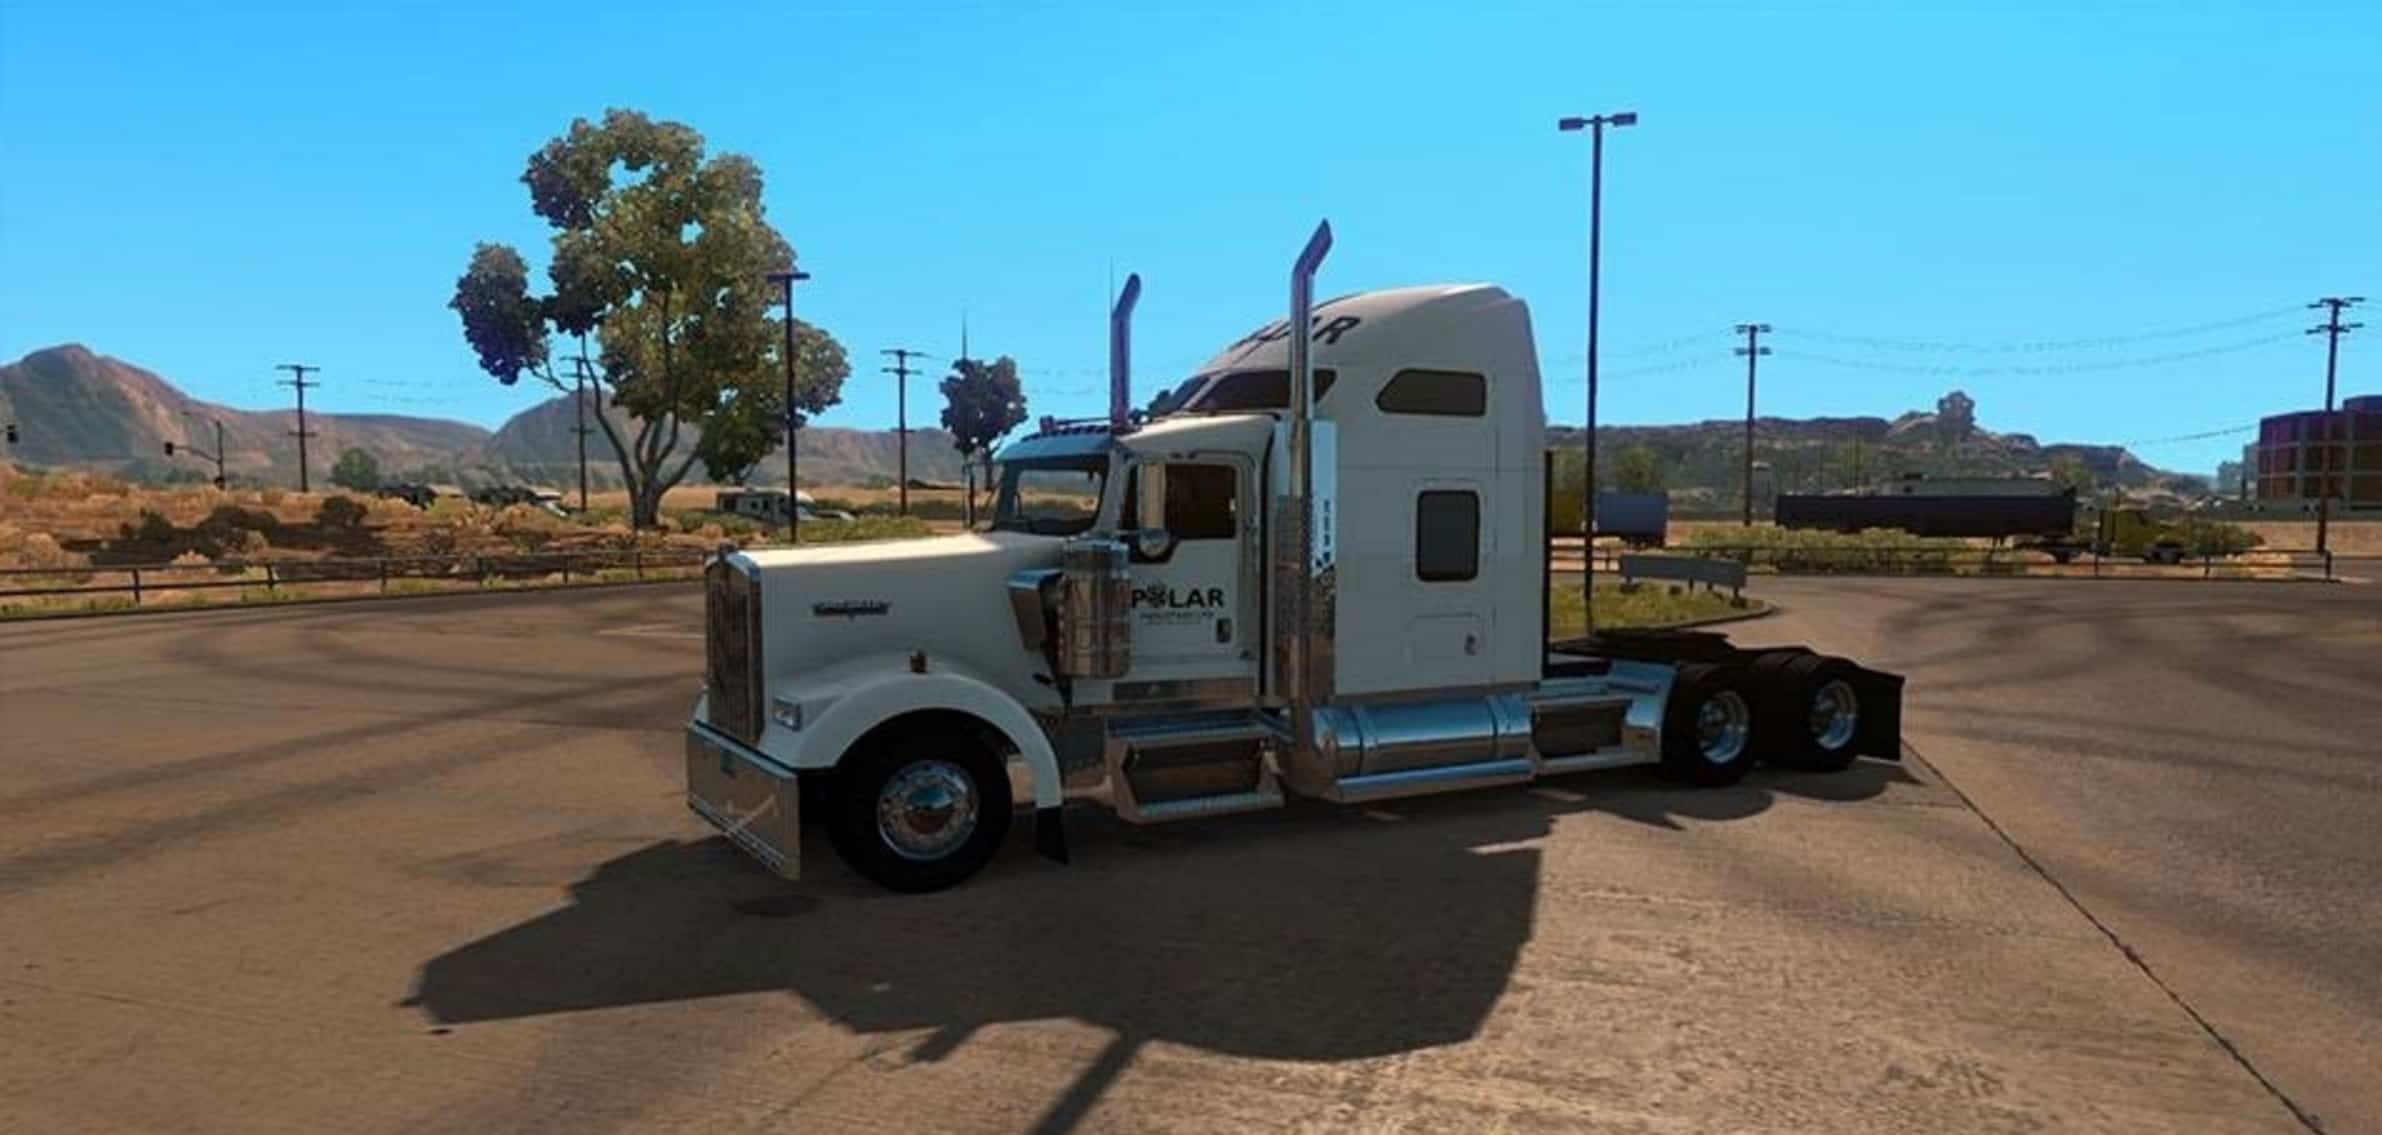 Polar Industries Skin for the Kenworth W900 Truck American Truck Simulator mod ATS mod